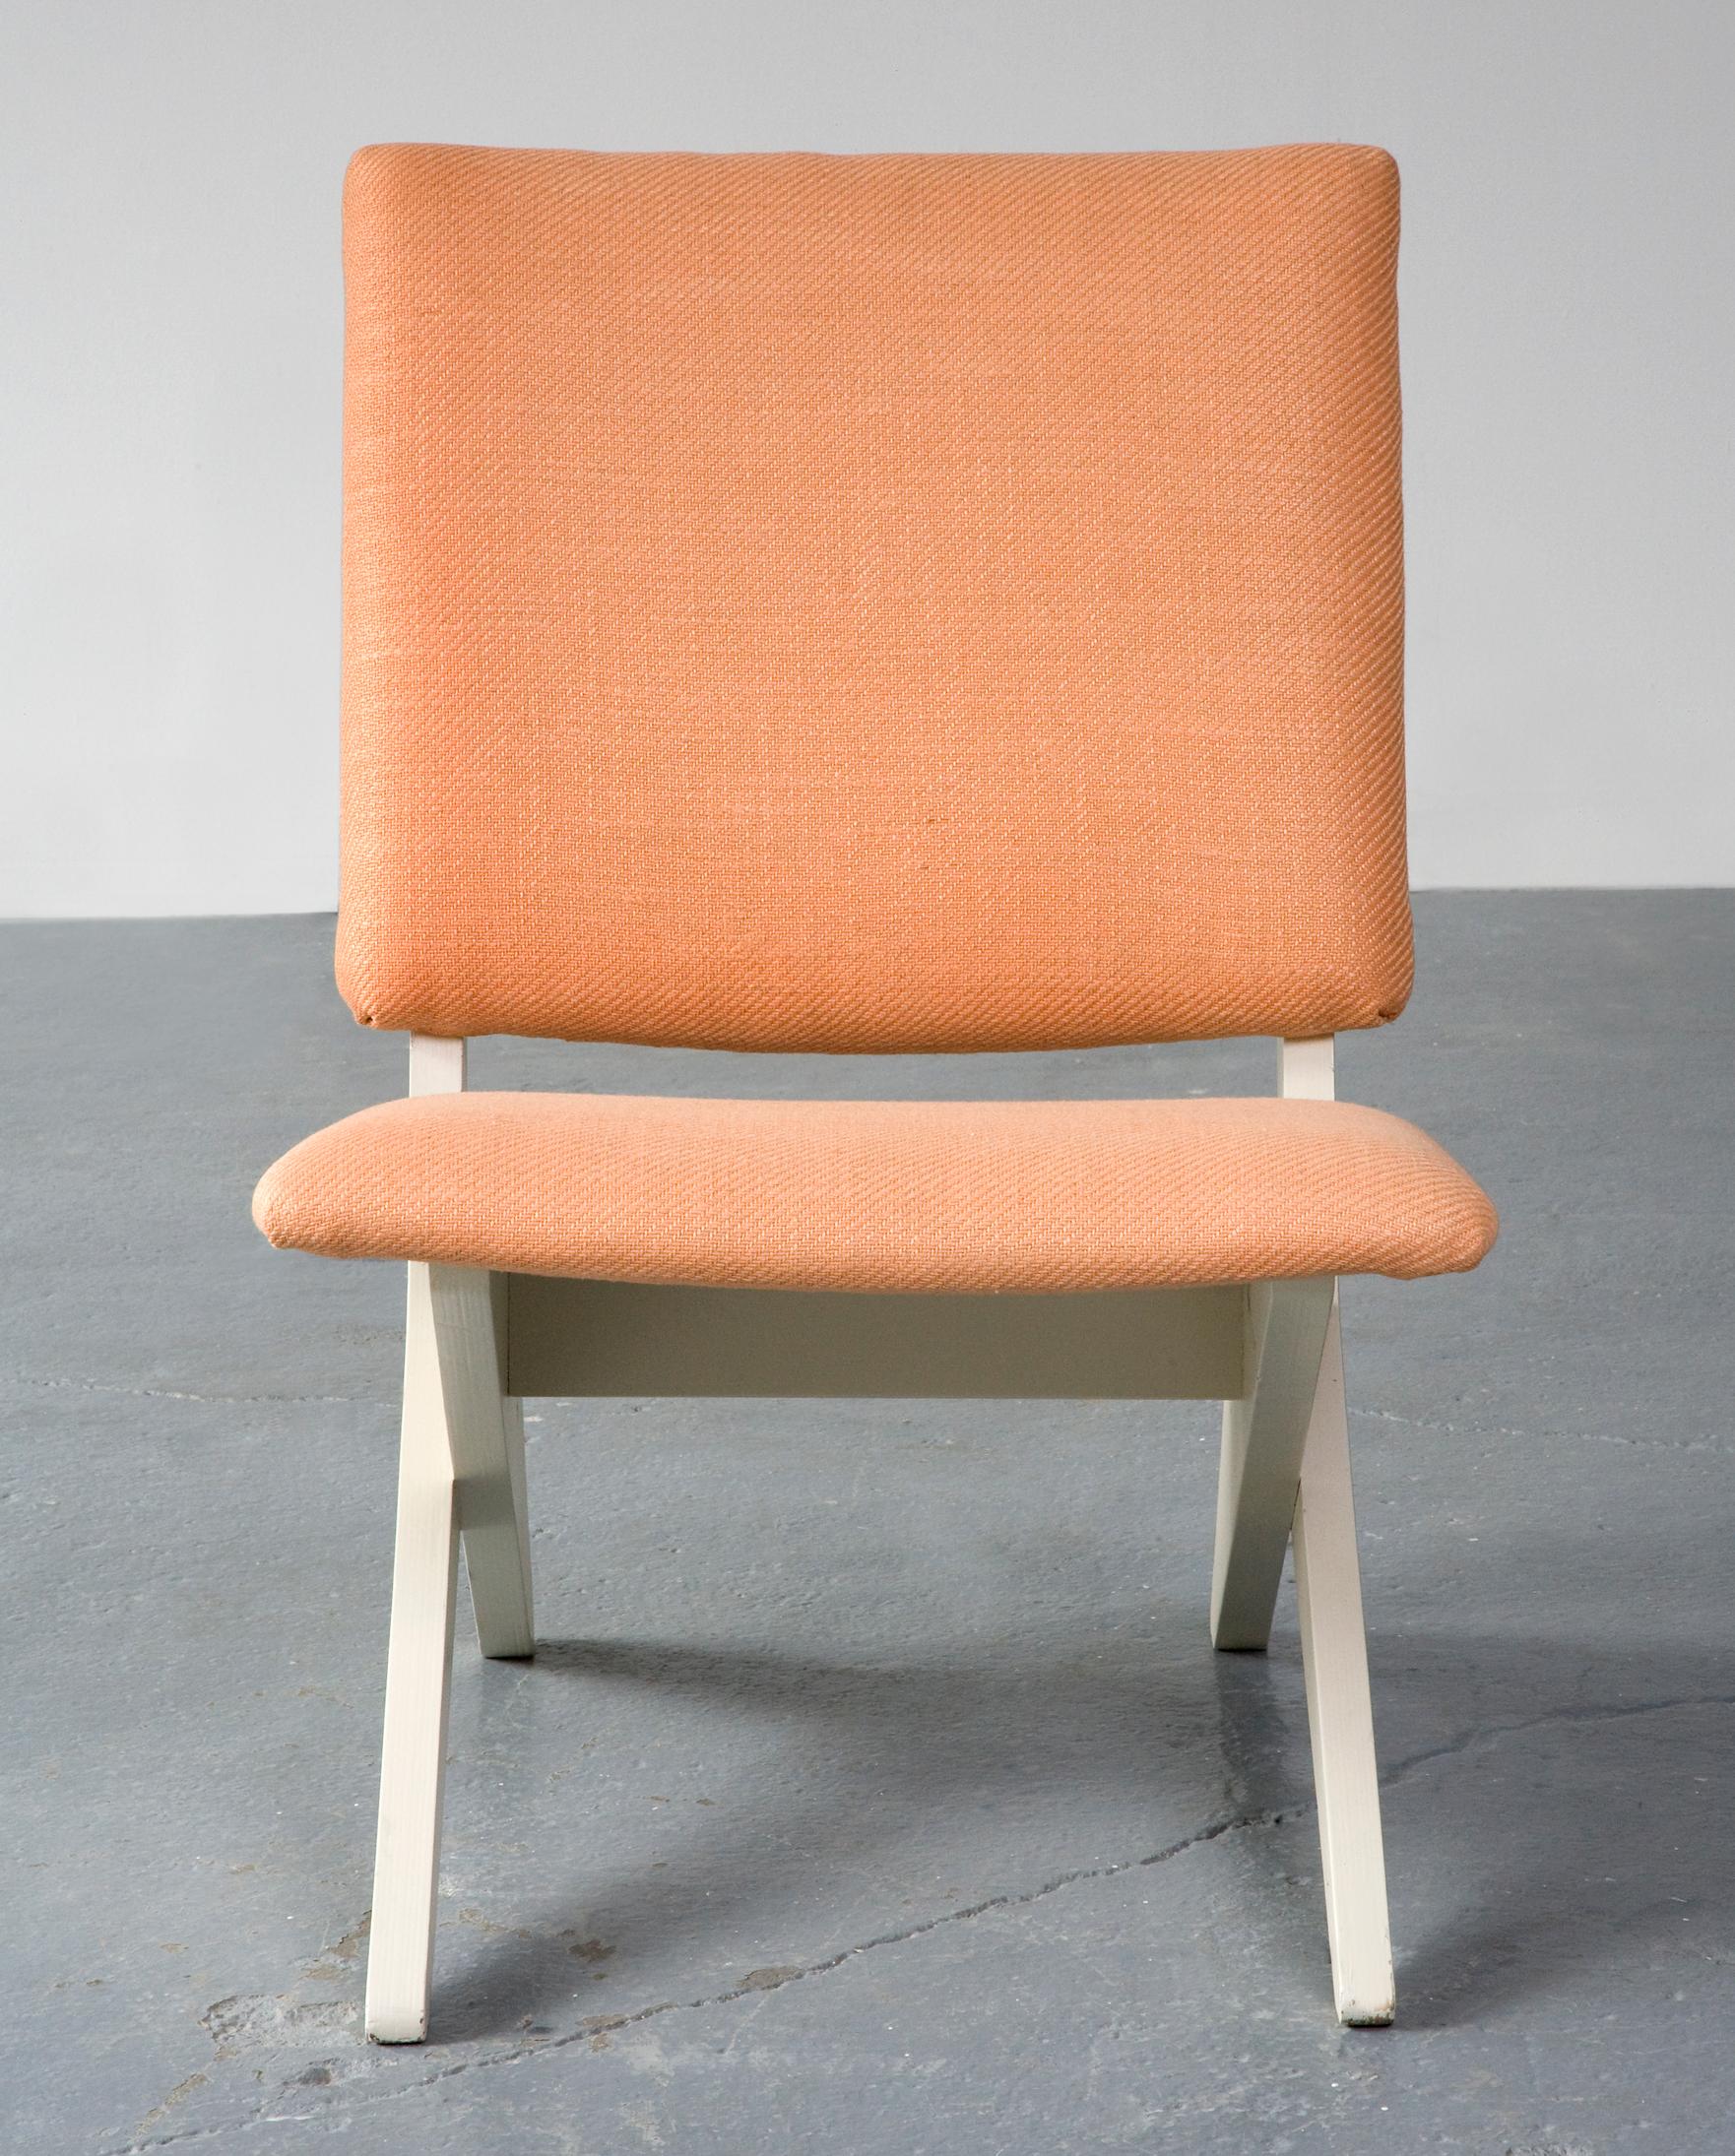 Upholstered chair on a sculptural plywood base. Designed by Peter van Grunsven for UMS-Pastoe, Holland, 1958.